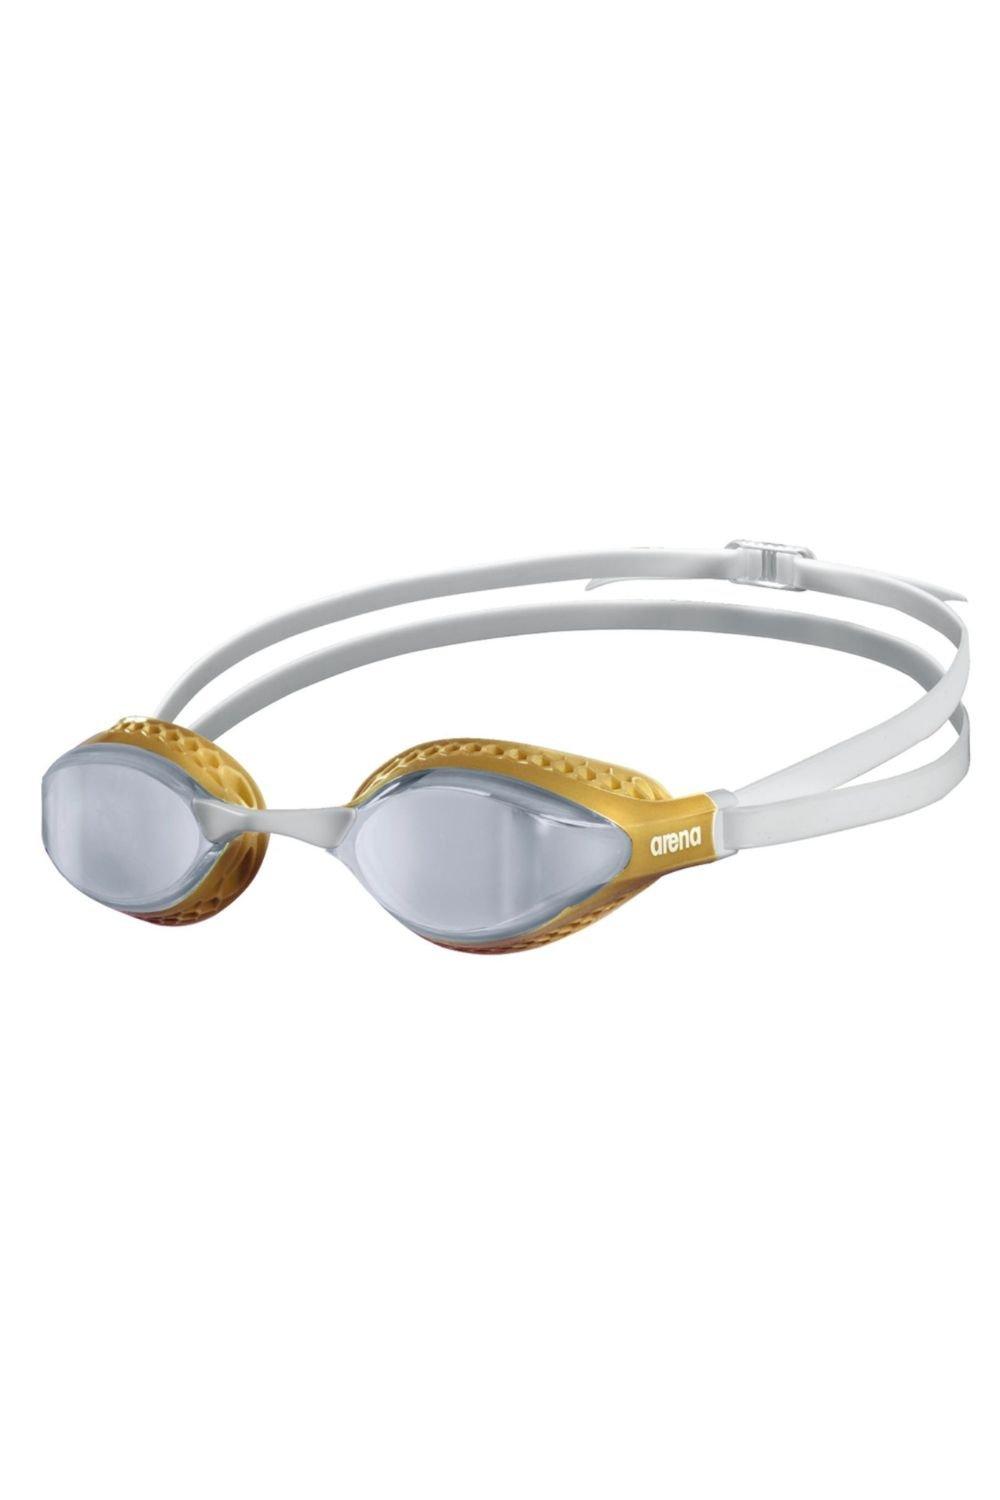 Очки для плавания с зеркалом Airspeed Arena, золото очки для плавания детские comet mirror